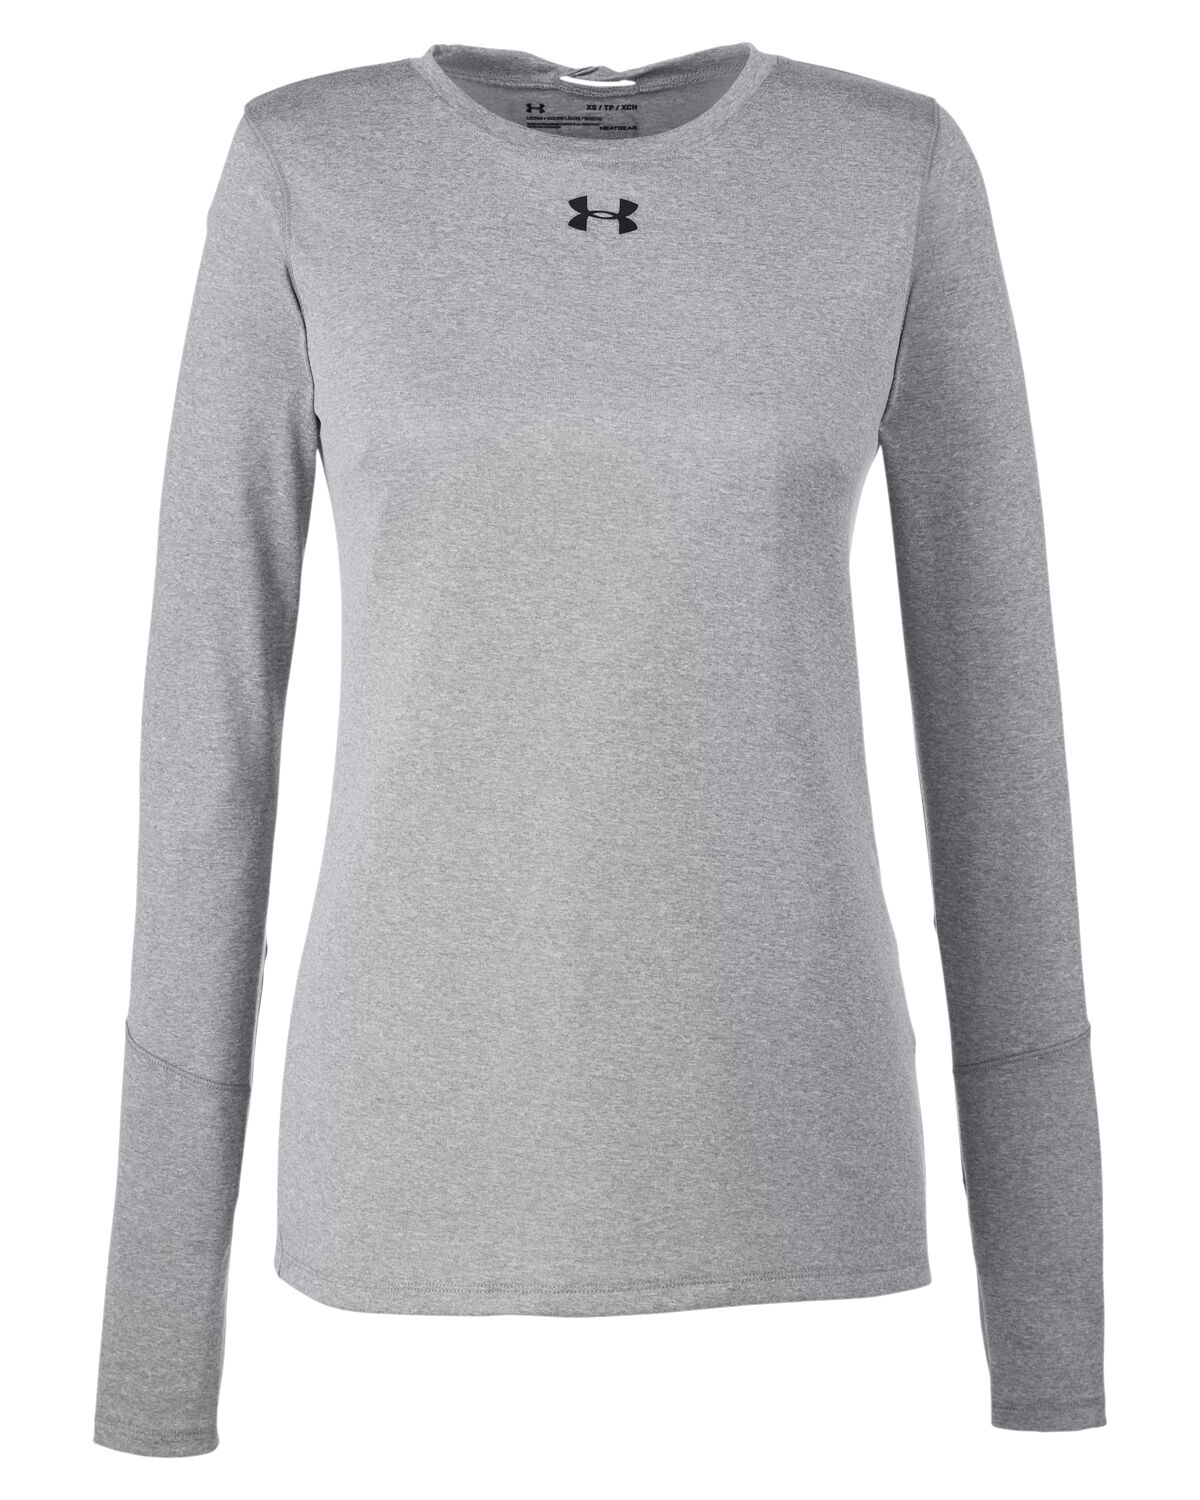 Custom Under Armour Long Sleeve Locker Performance Shirt 2.0 - Design Long  Sleeve Performance Shirts Online at